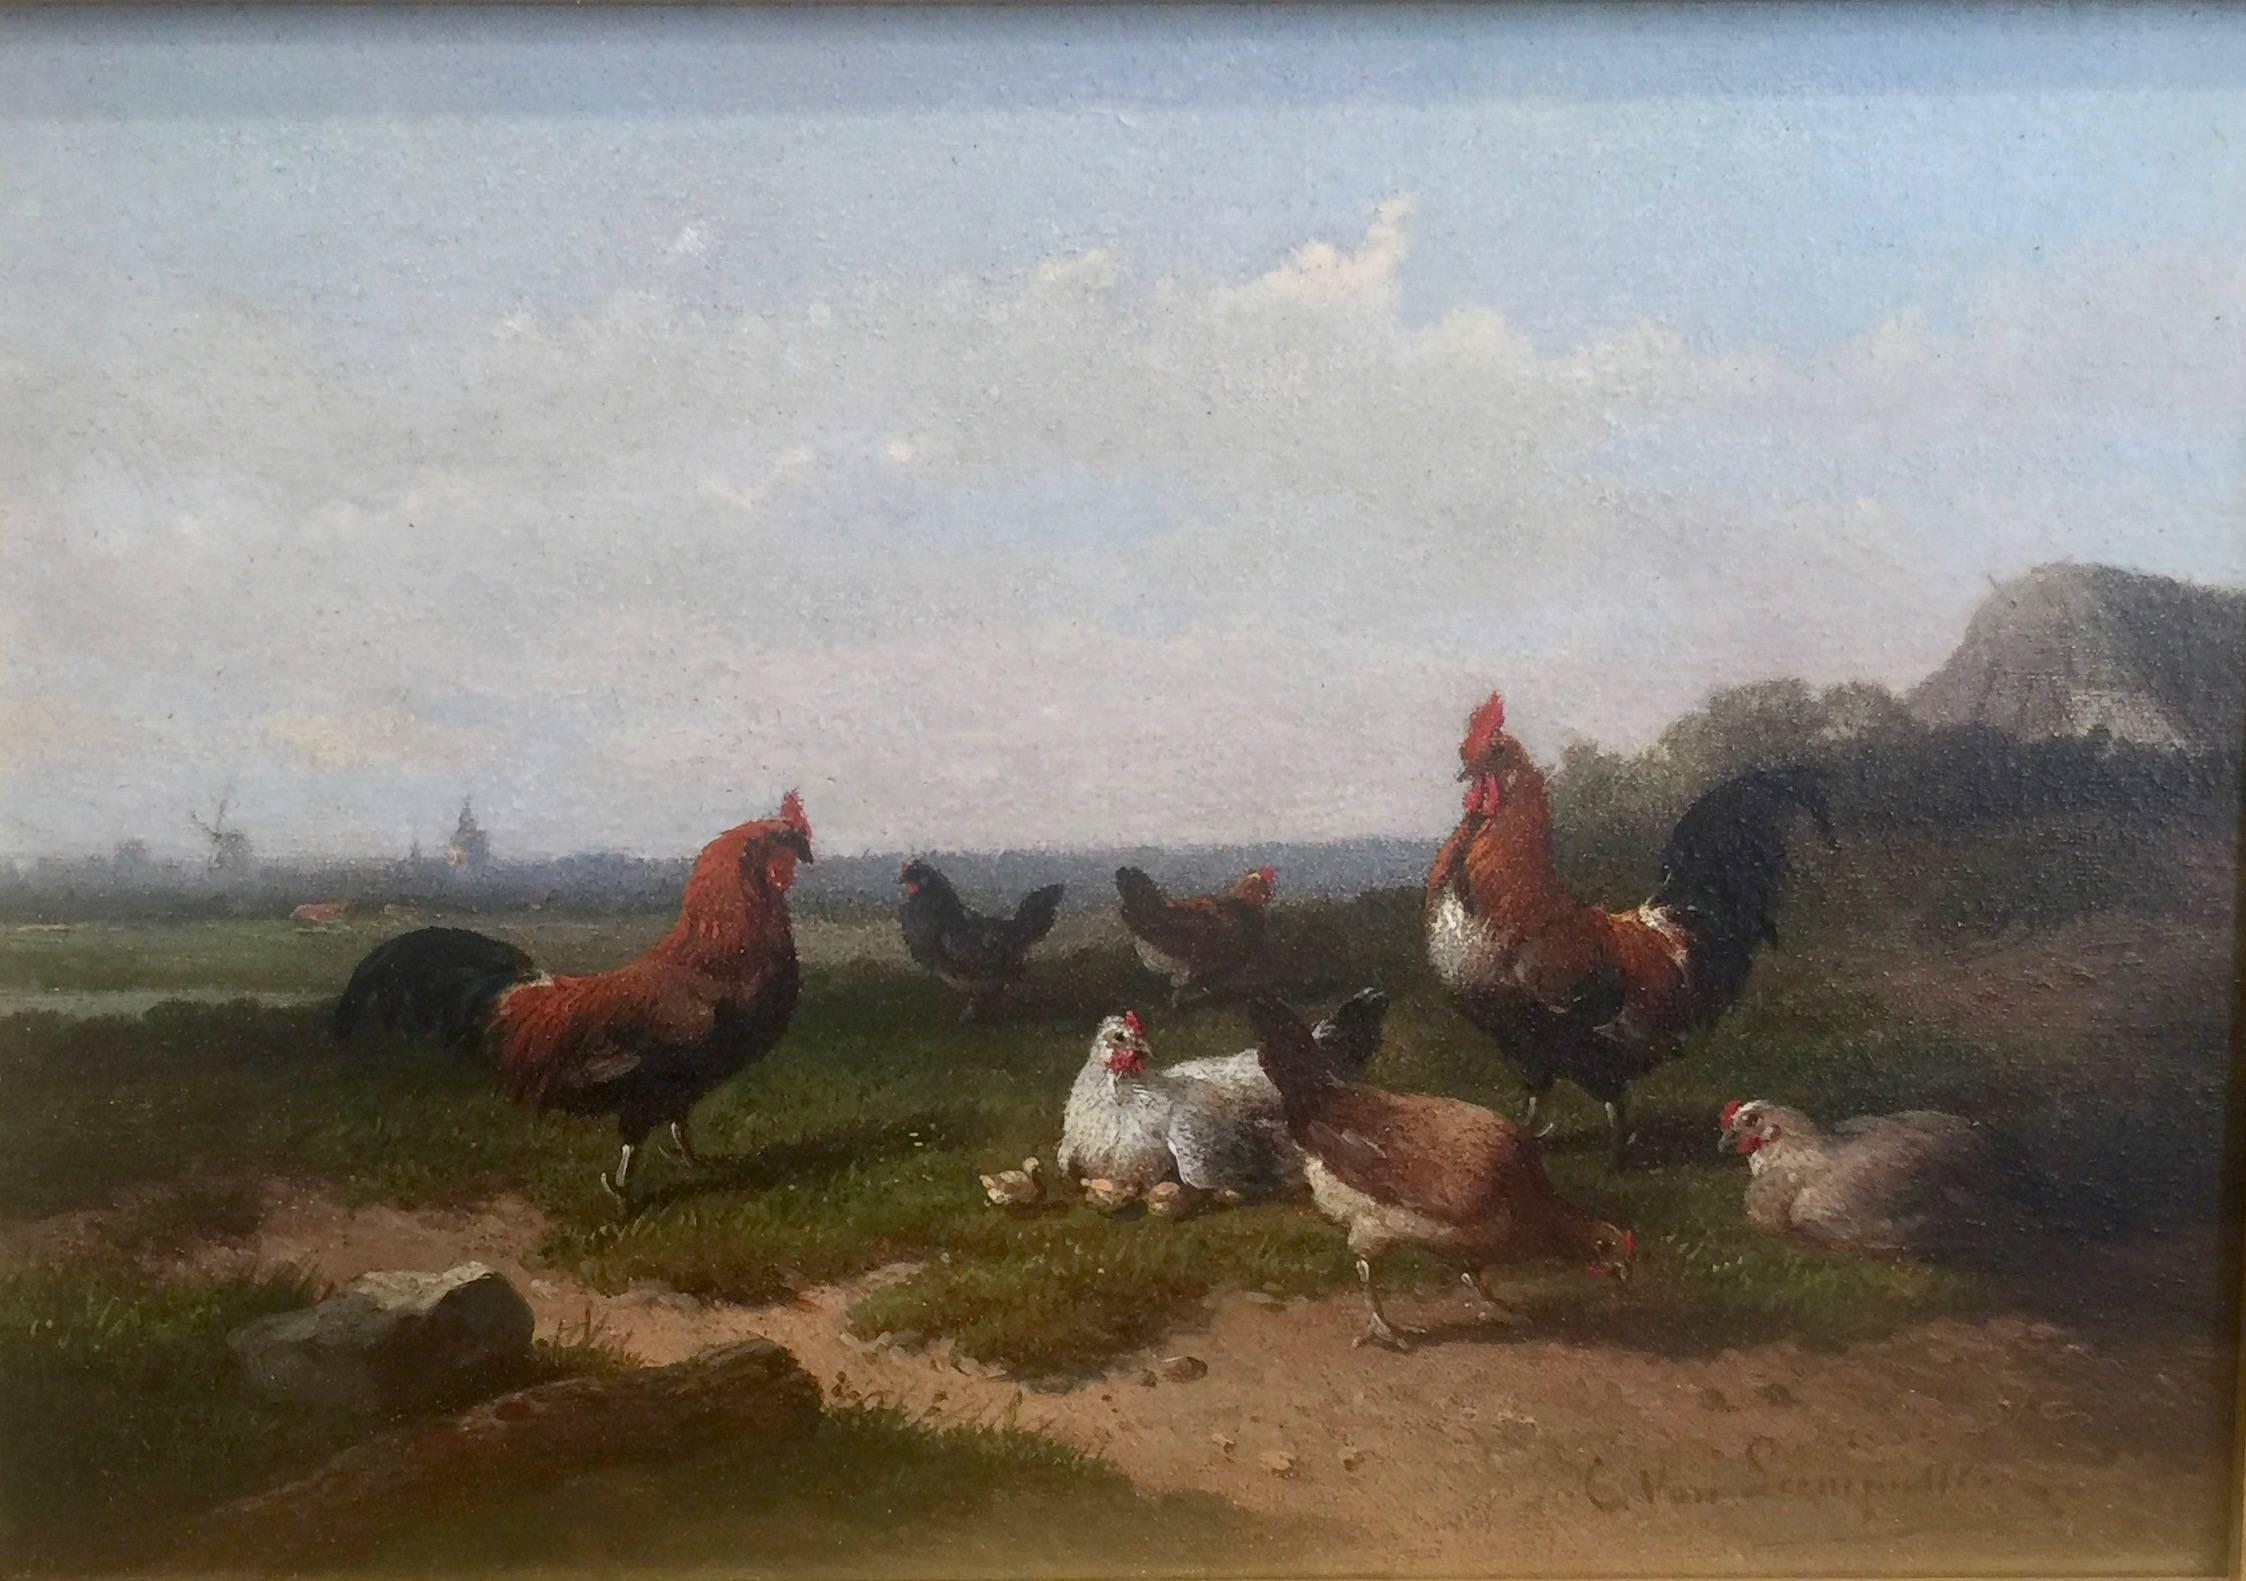 19th Century Dutch scene with Chickens in a field - Painting by Cornelis van Leemputten